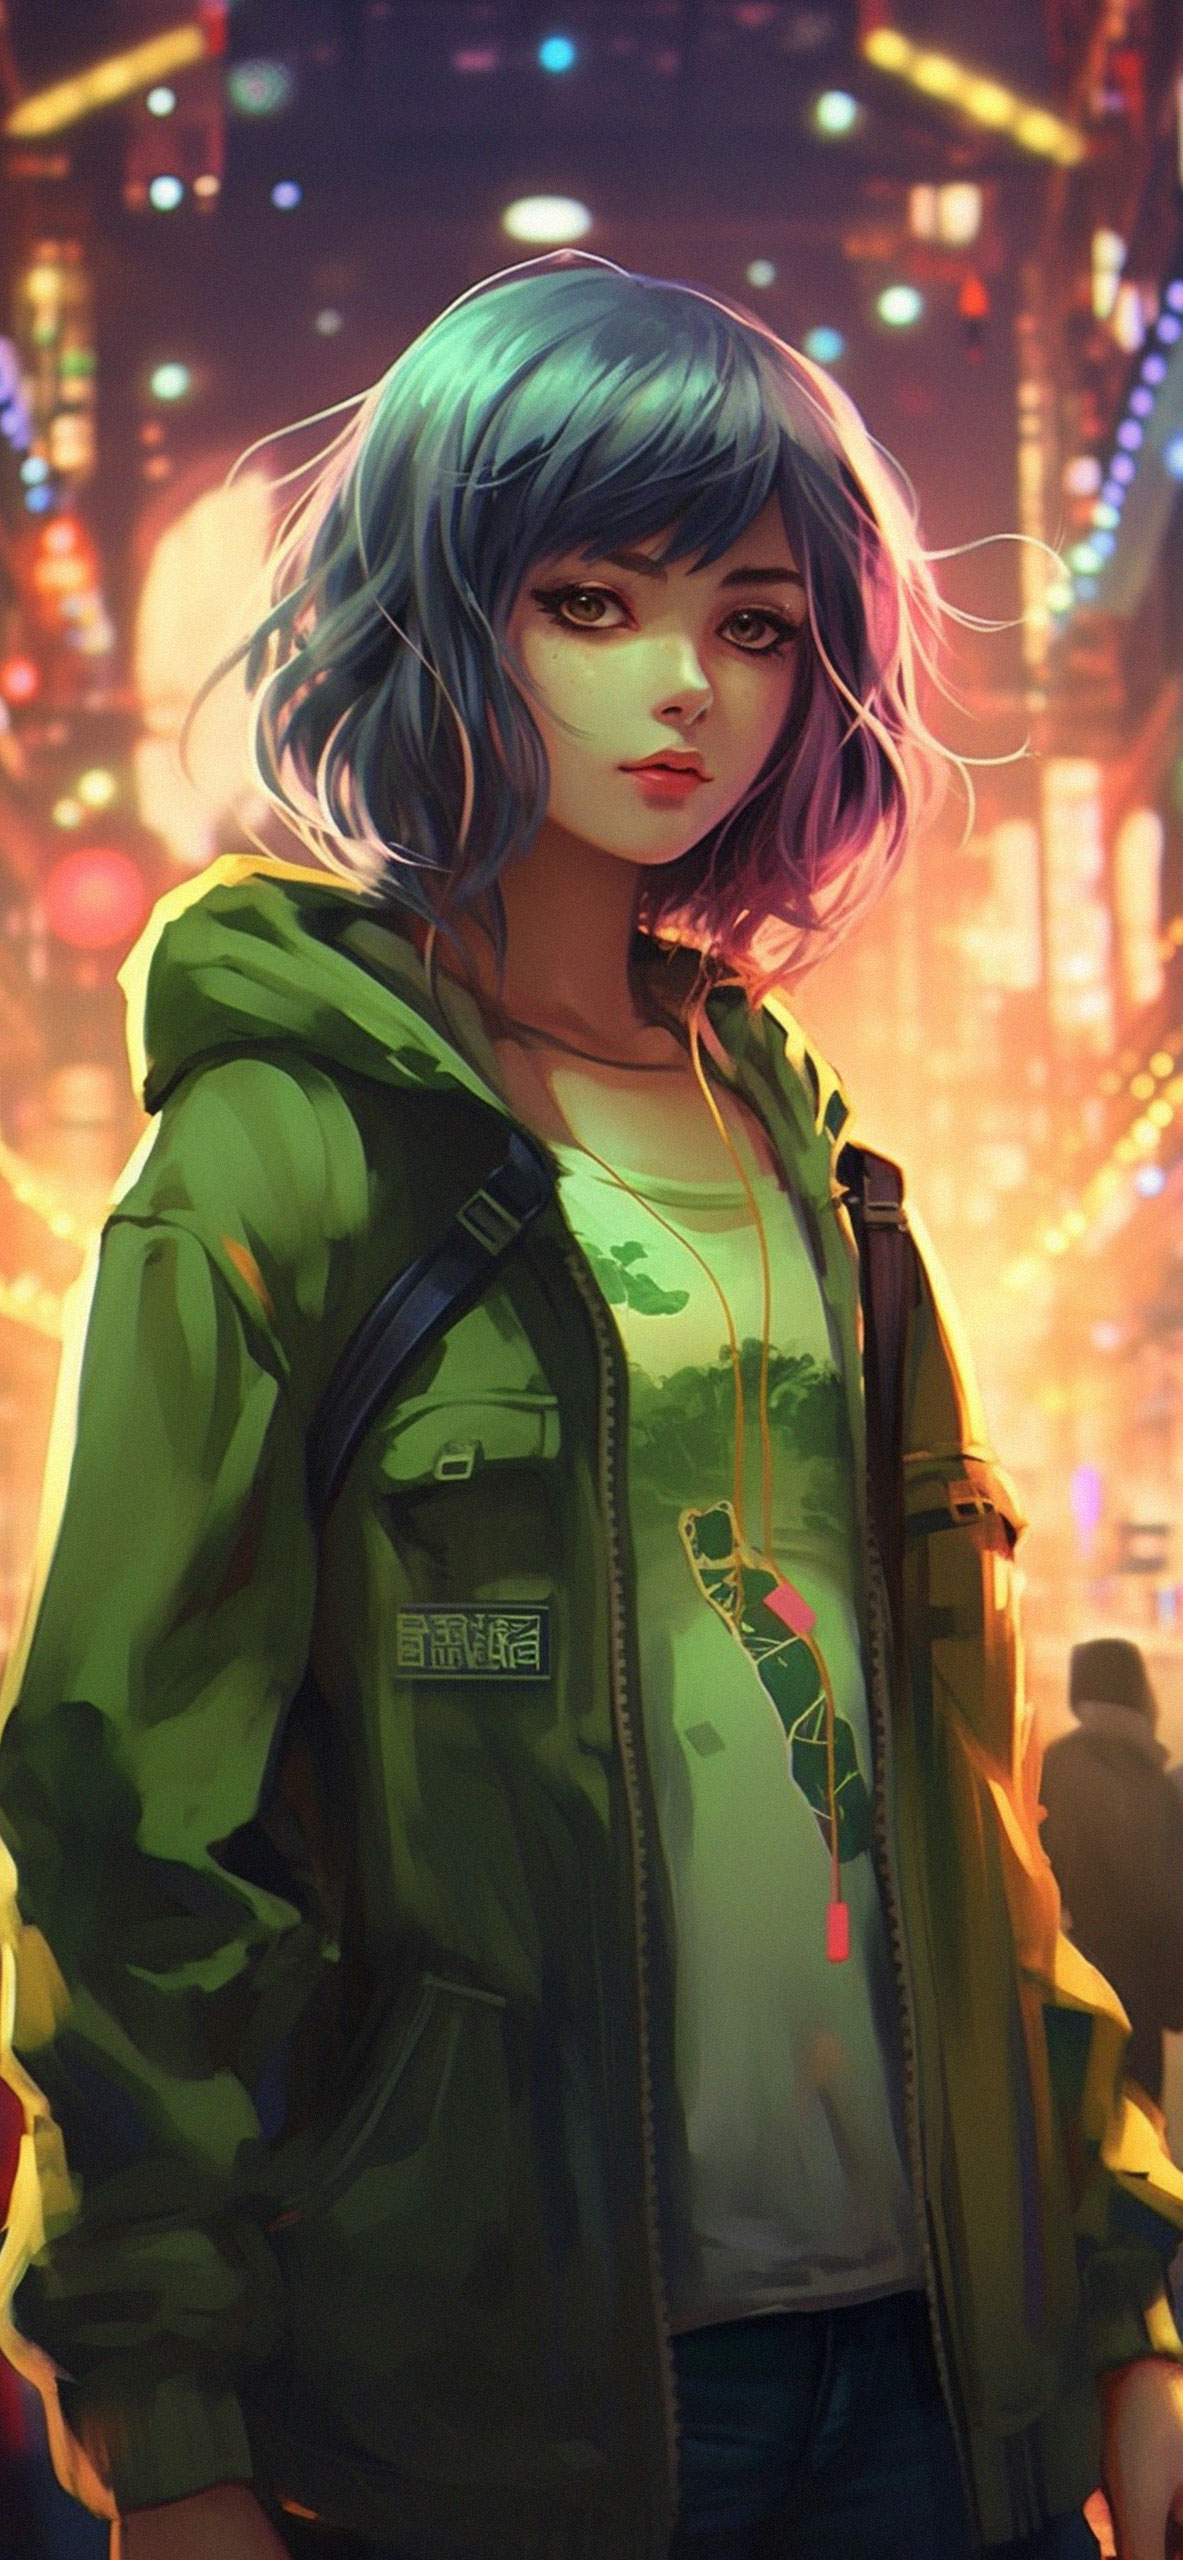 Anime Girl in a Green Jacket Wallpaper Anime Girl Wallpaper fo